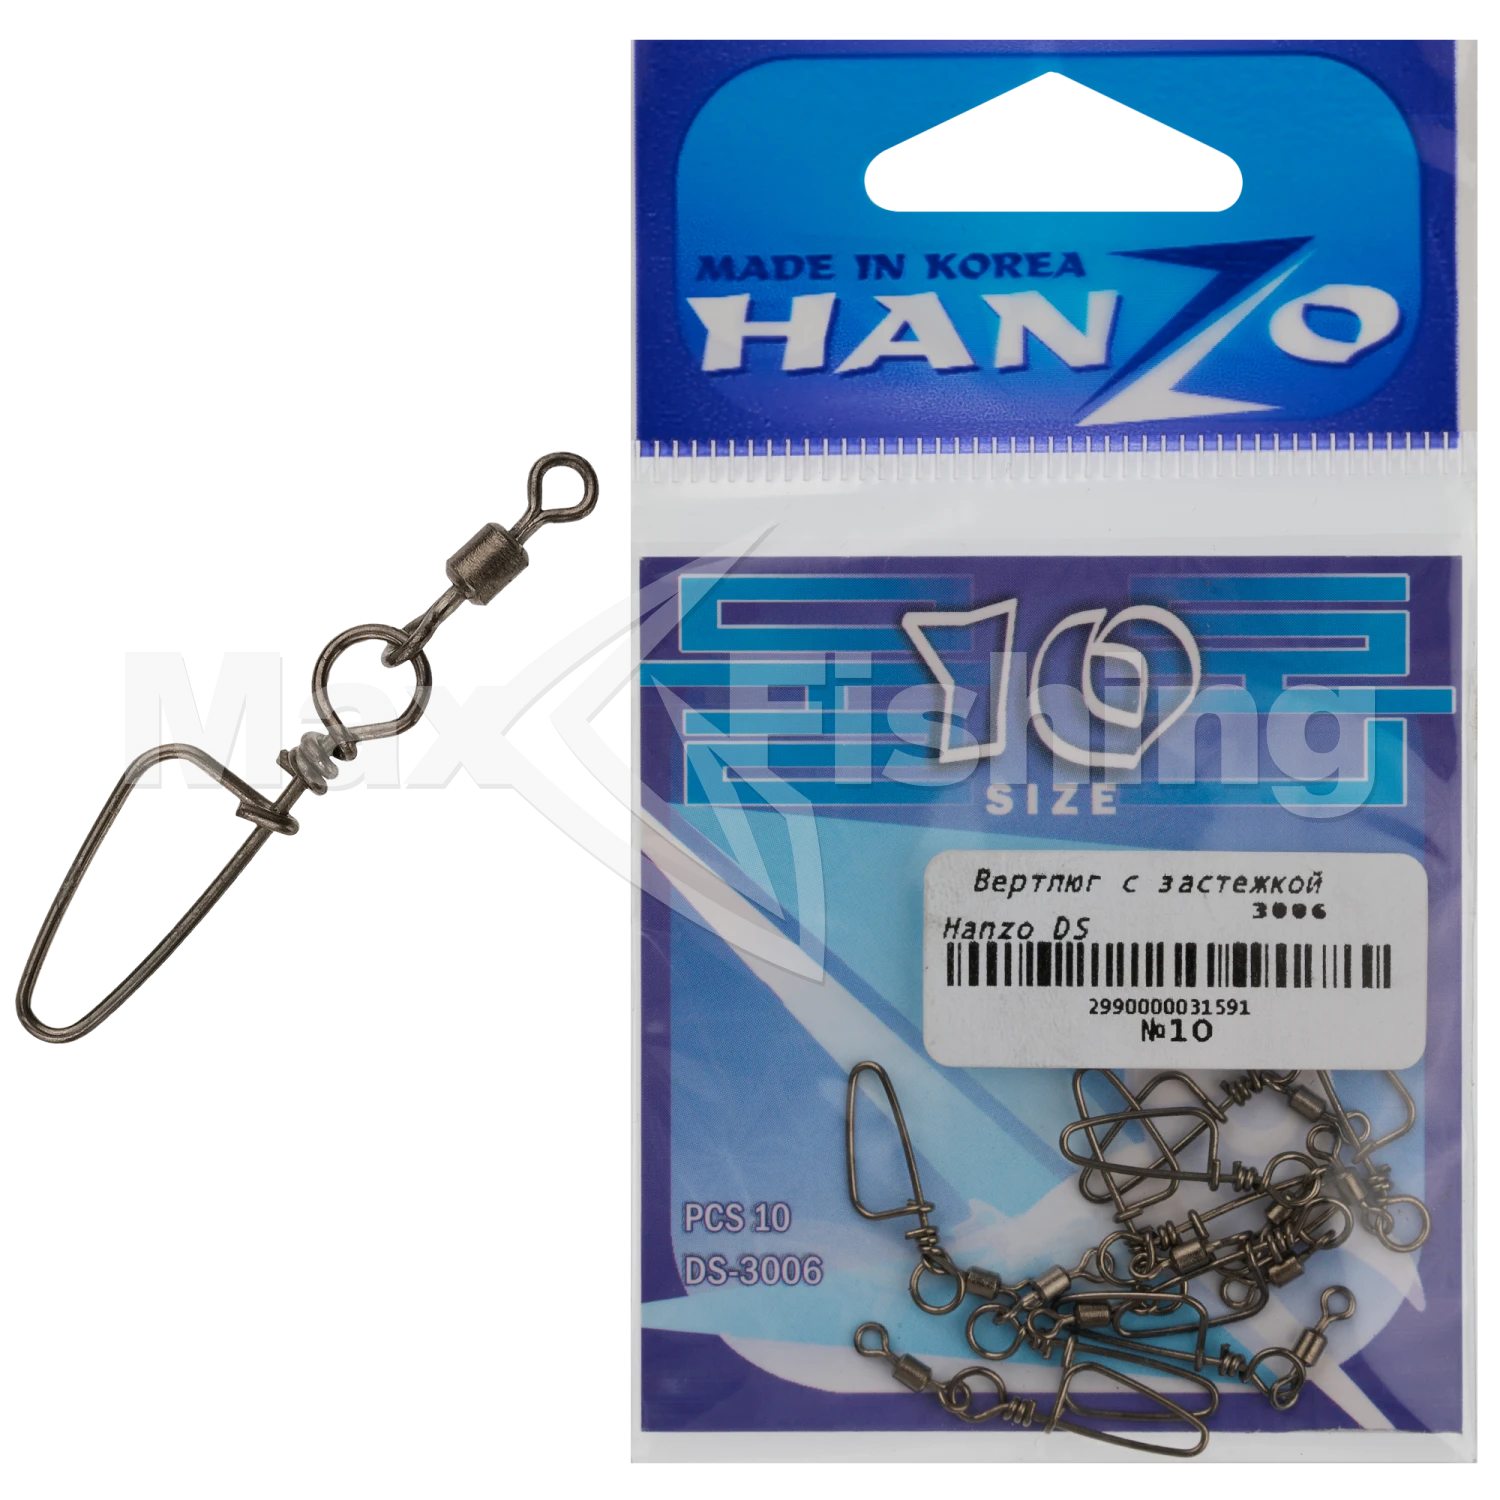 Вертлюг с застежкой Hanzo DS 3006 #10